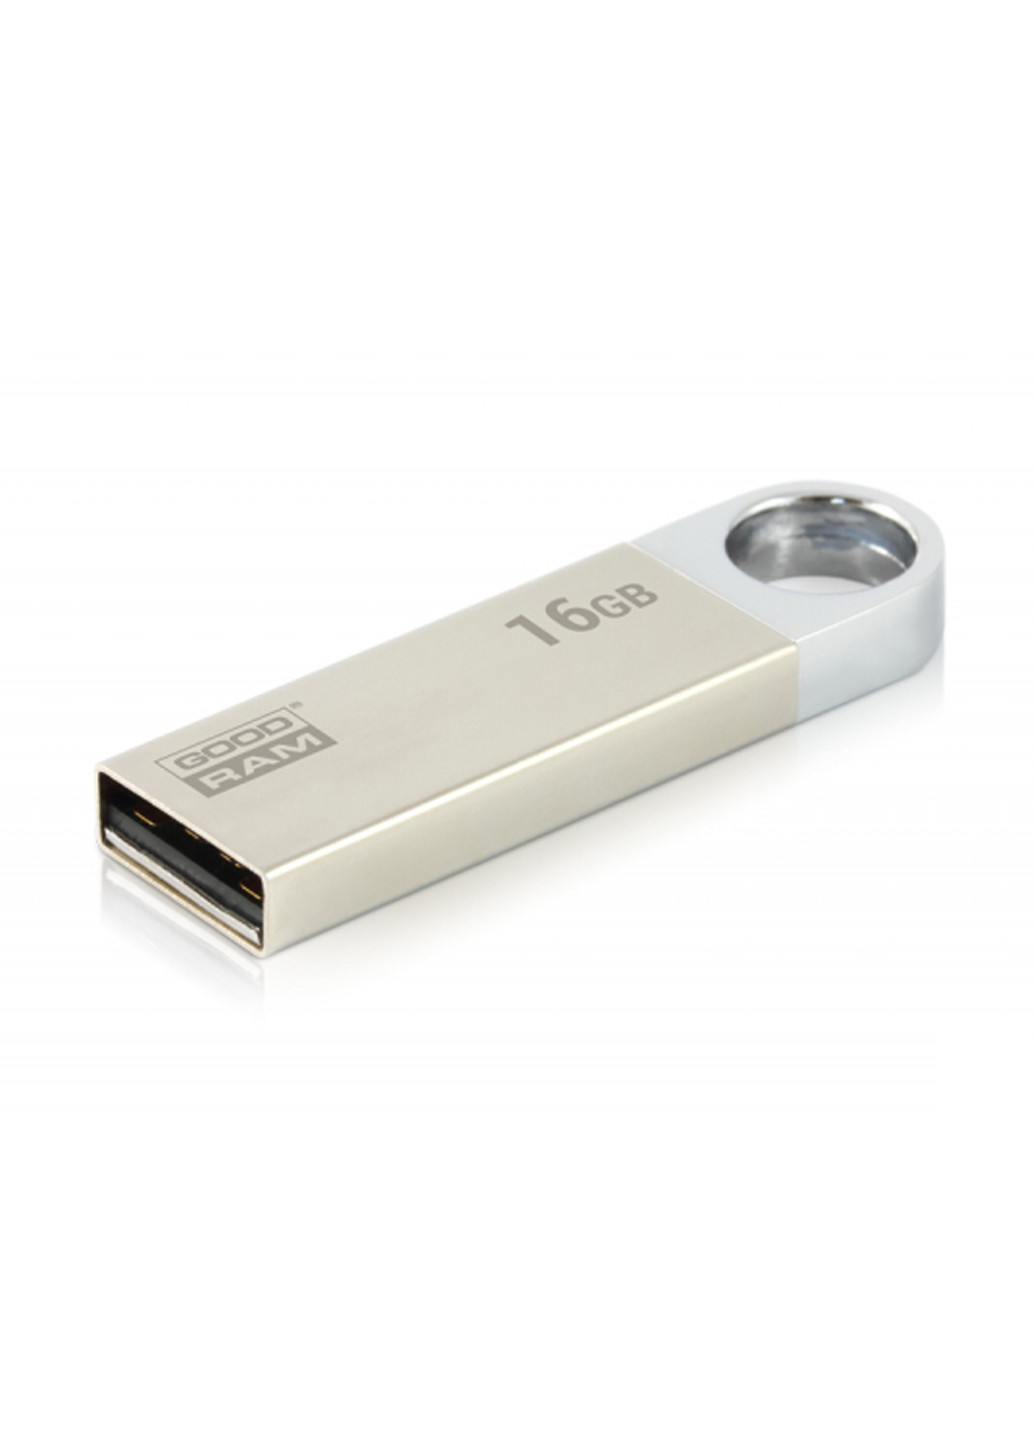 Флеш память USB 16GB UUN2 USB 2.0 Unity (UUN2-0160S0R11) Goodram флеш память usb goodram 16gb uun2 usb 2.0 unity (uun2-0160s0r11) (136742722)